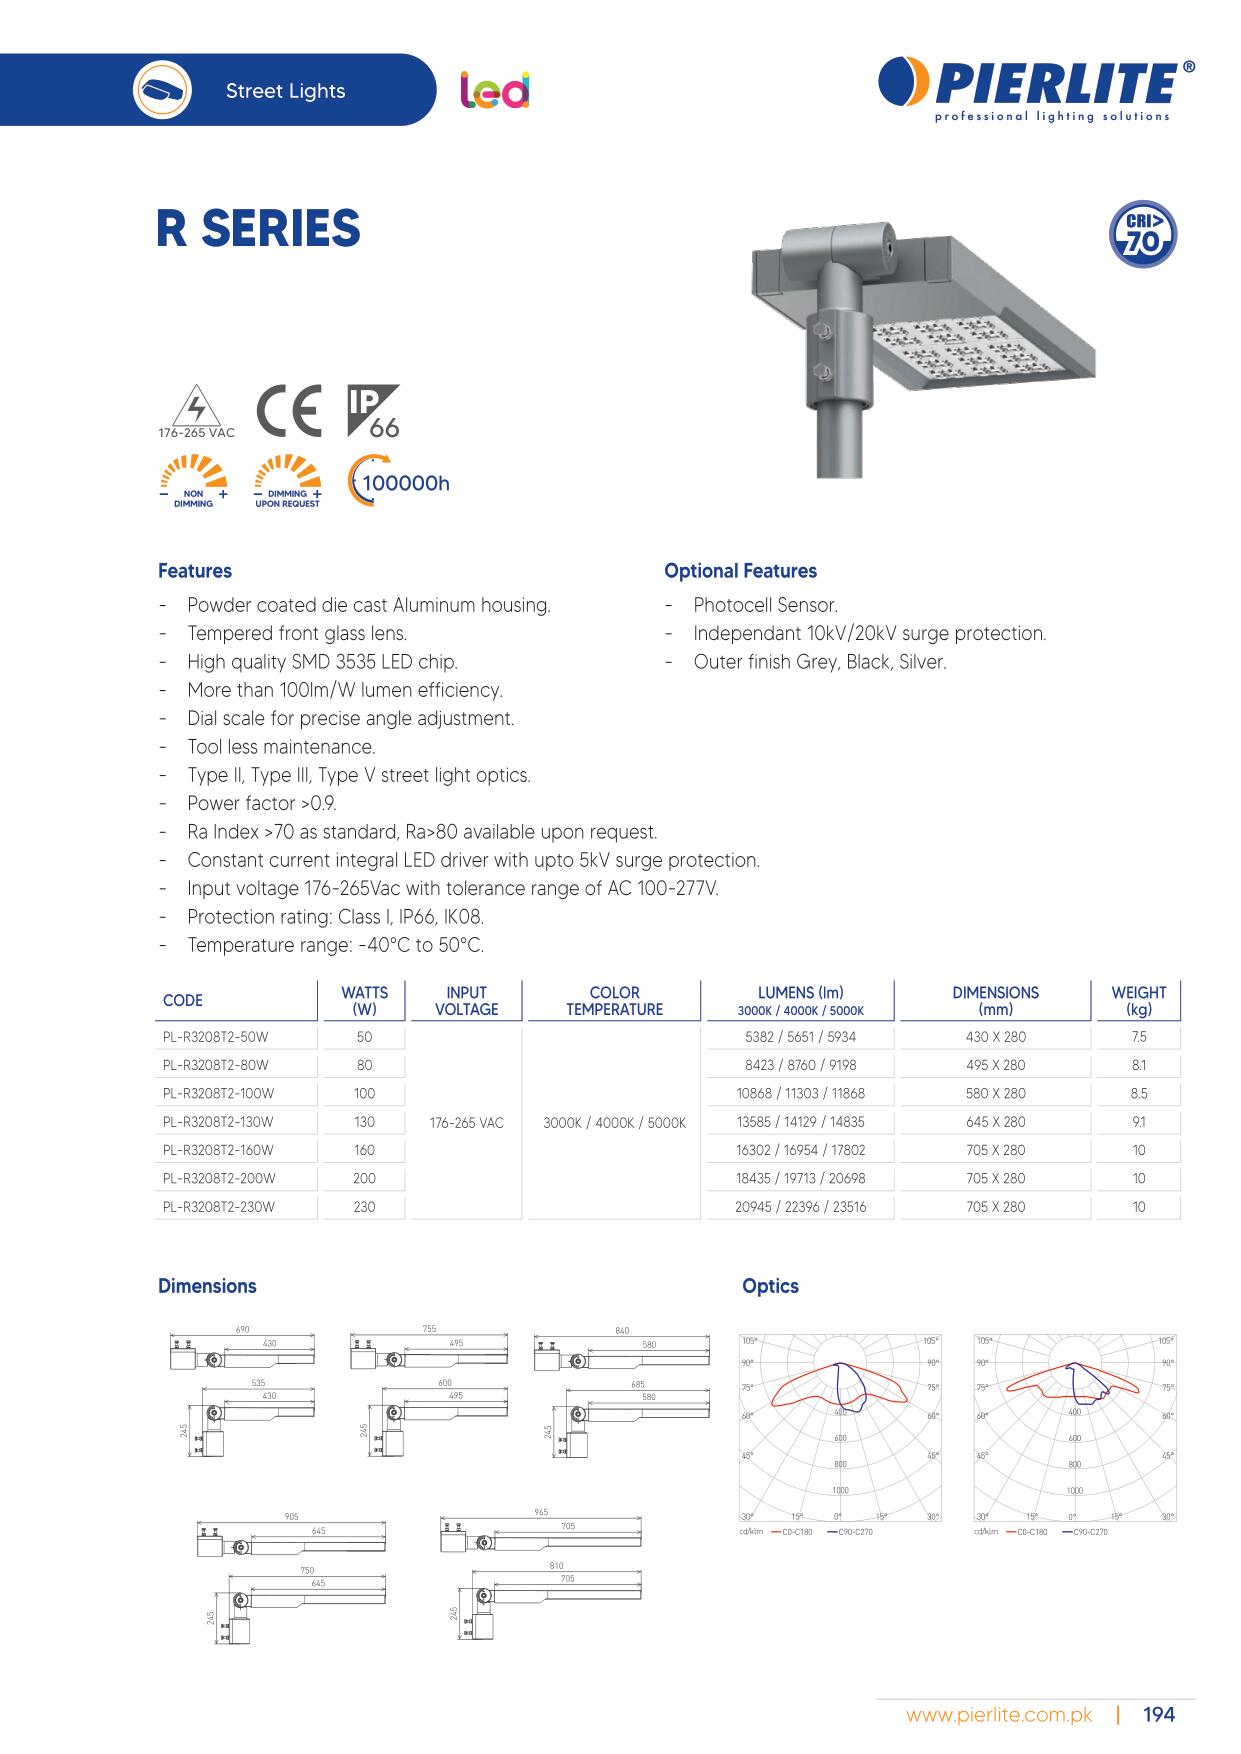 Pierlite LED Luminaire Catalog 2021-203